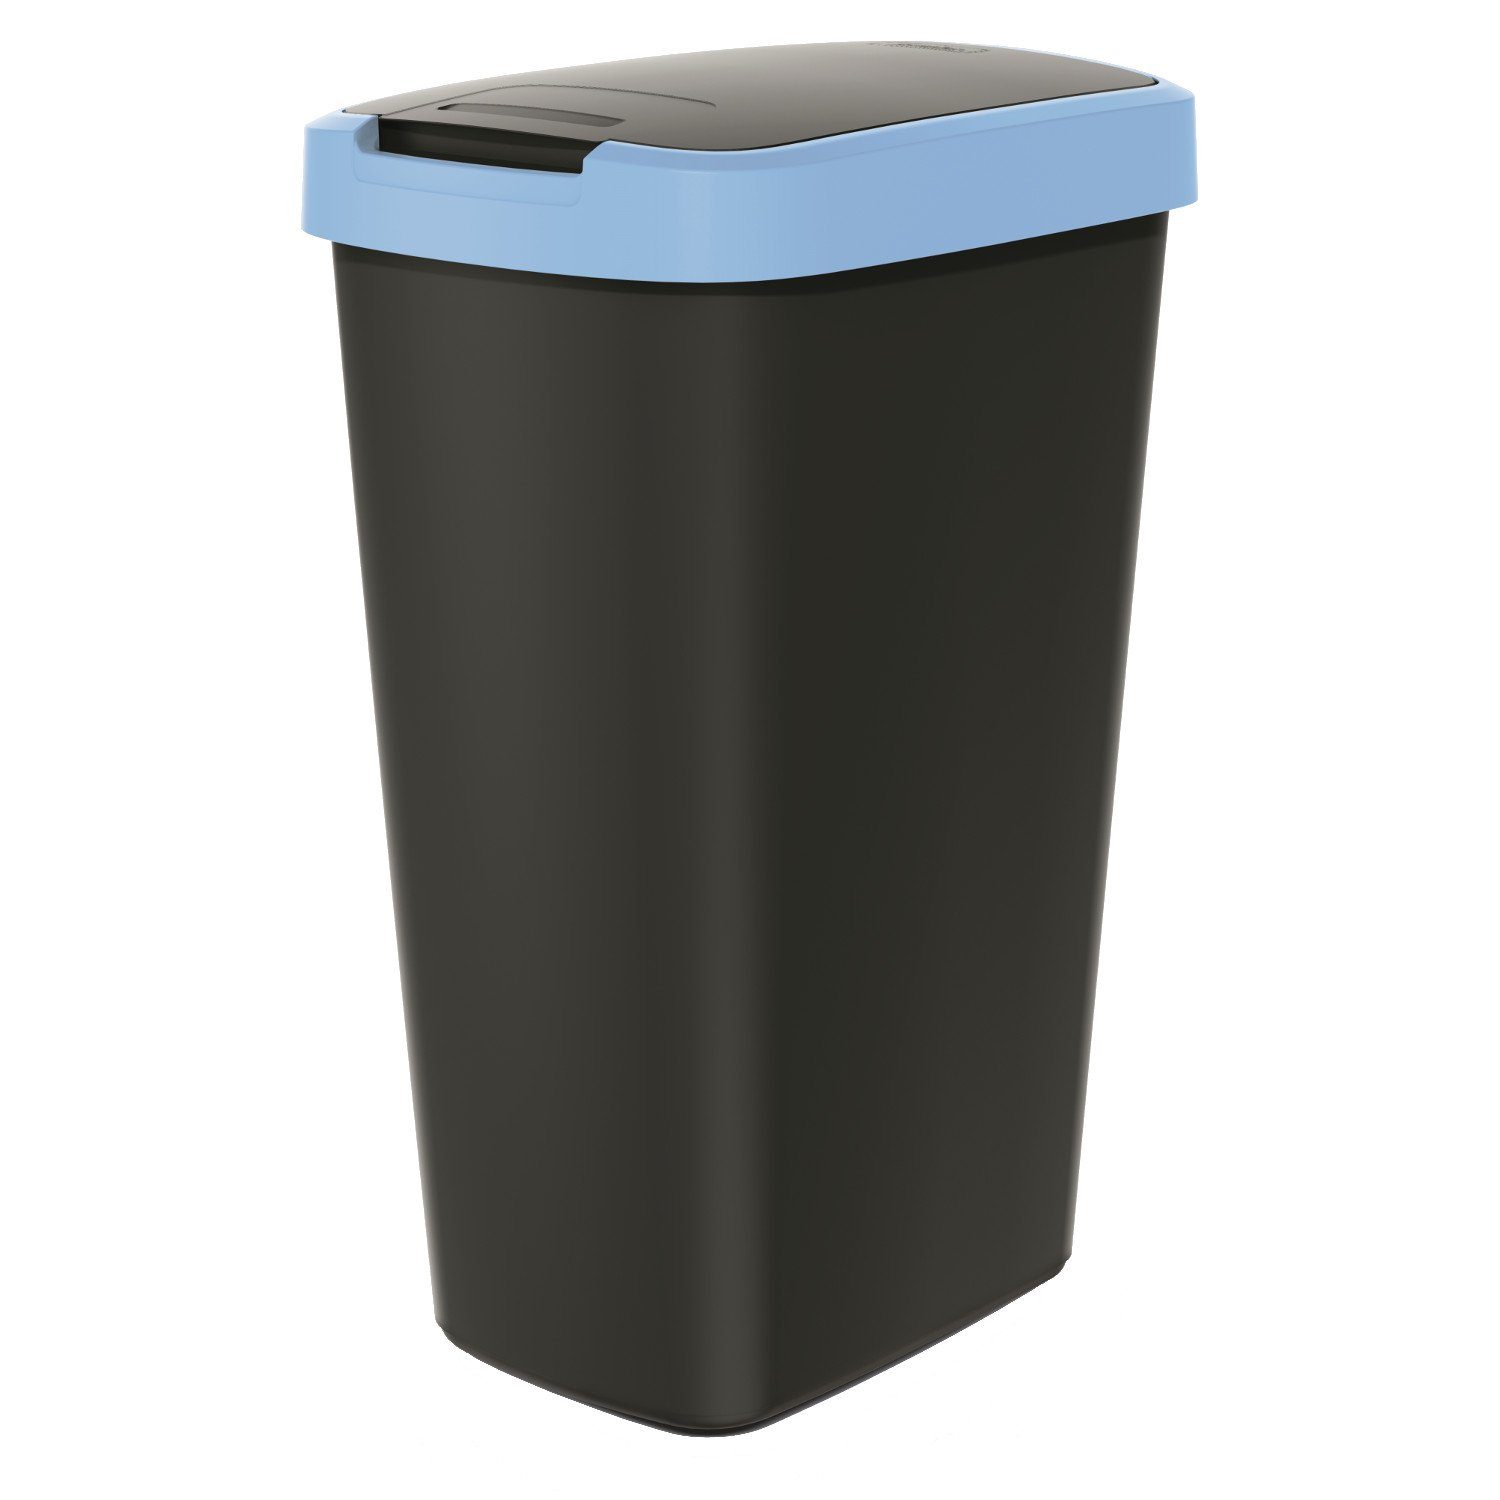 Keden Mülleimer Compacta Q, Abfallbehälter 45l mit Deckel KEDEN COMPACTA Q Blau